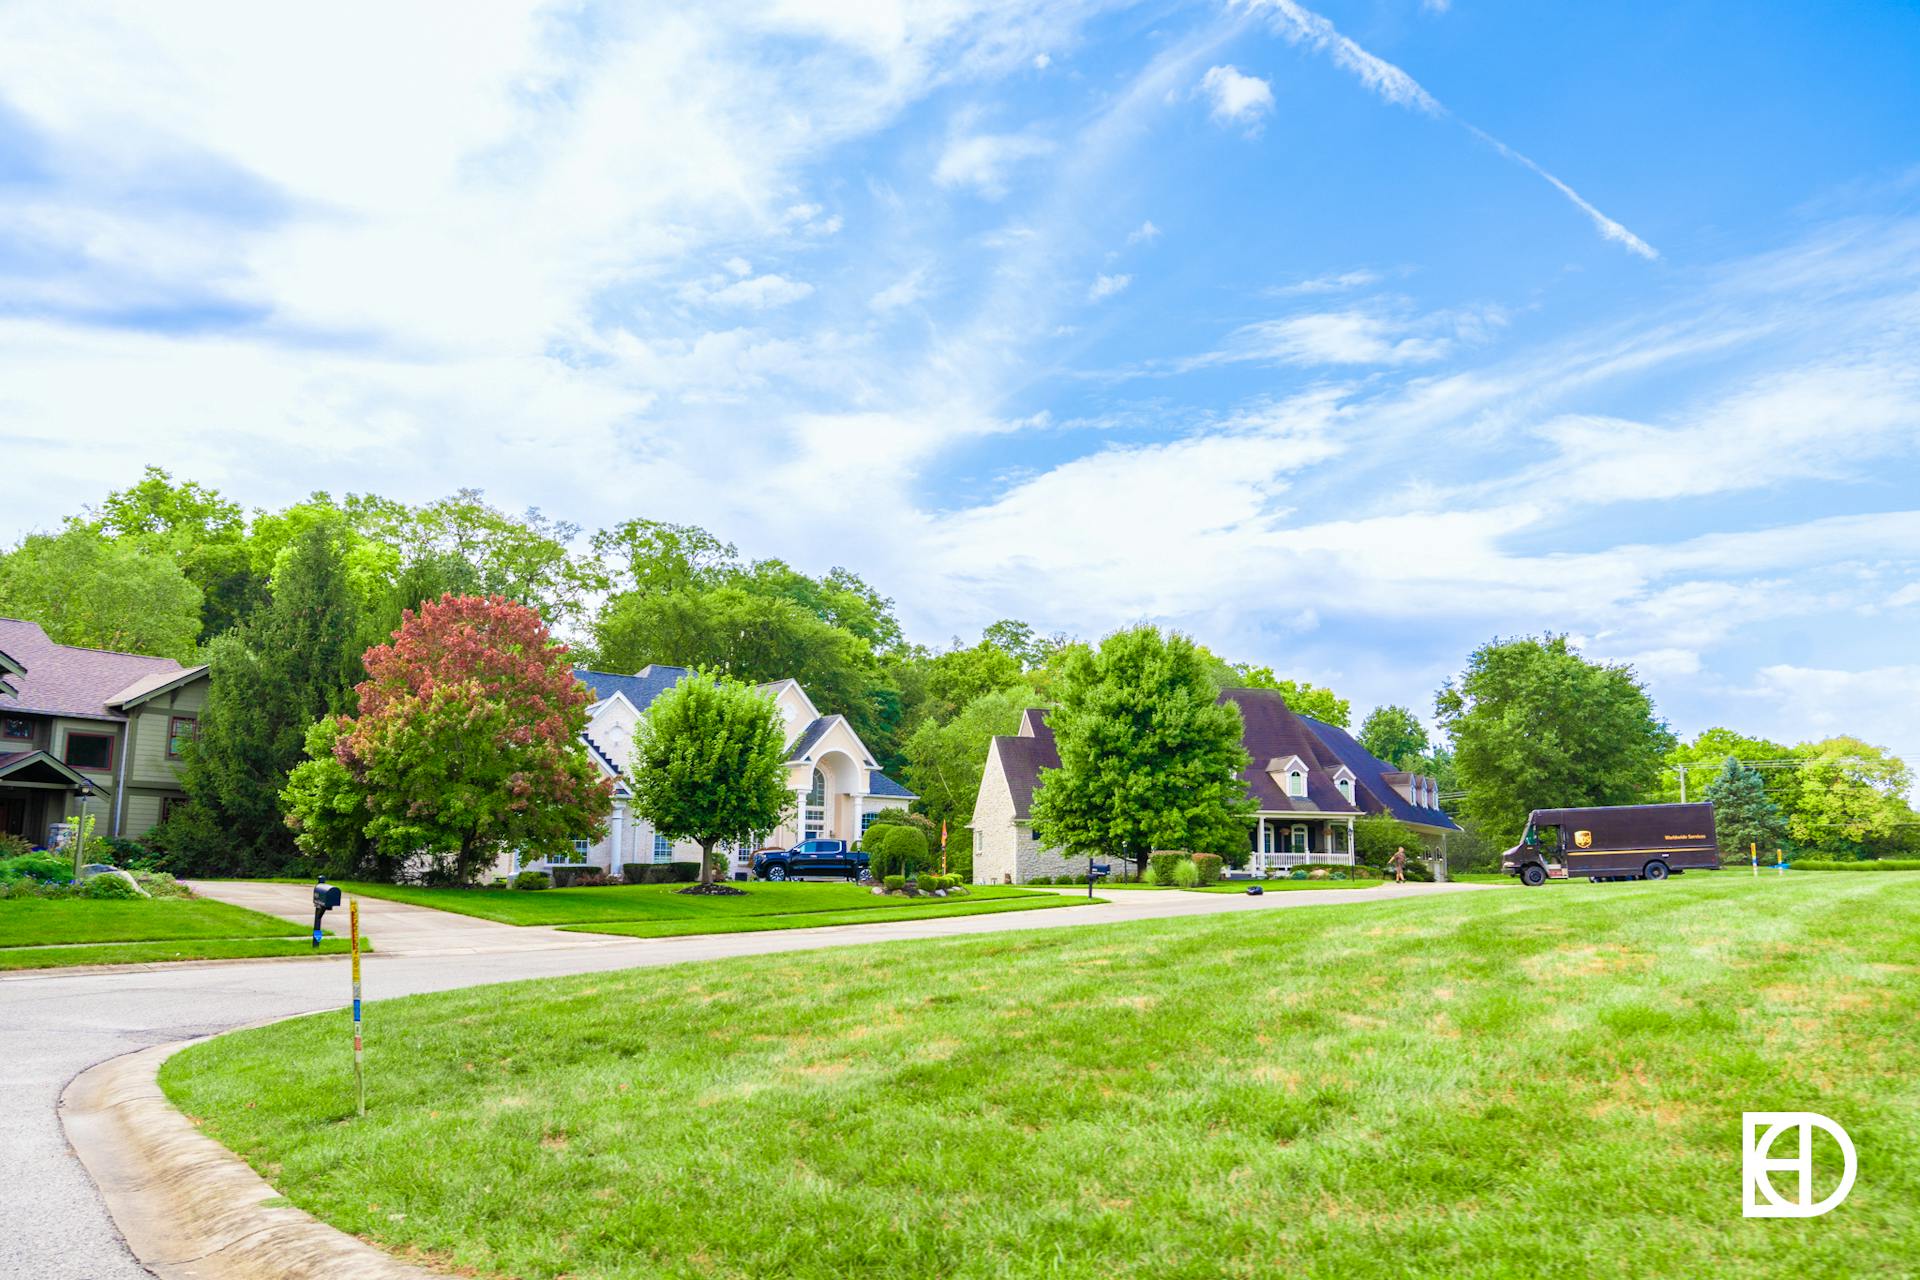 Photo of residential street in Austin Oaks neighborhood in Zionsville, Indiana.